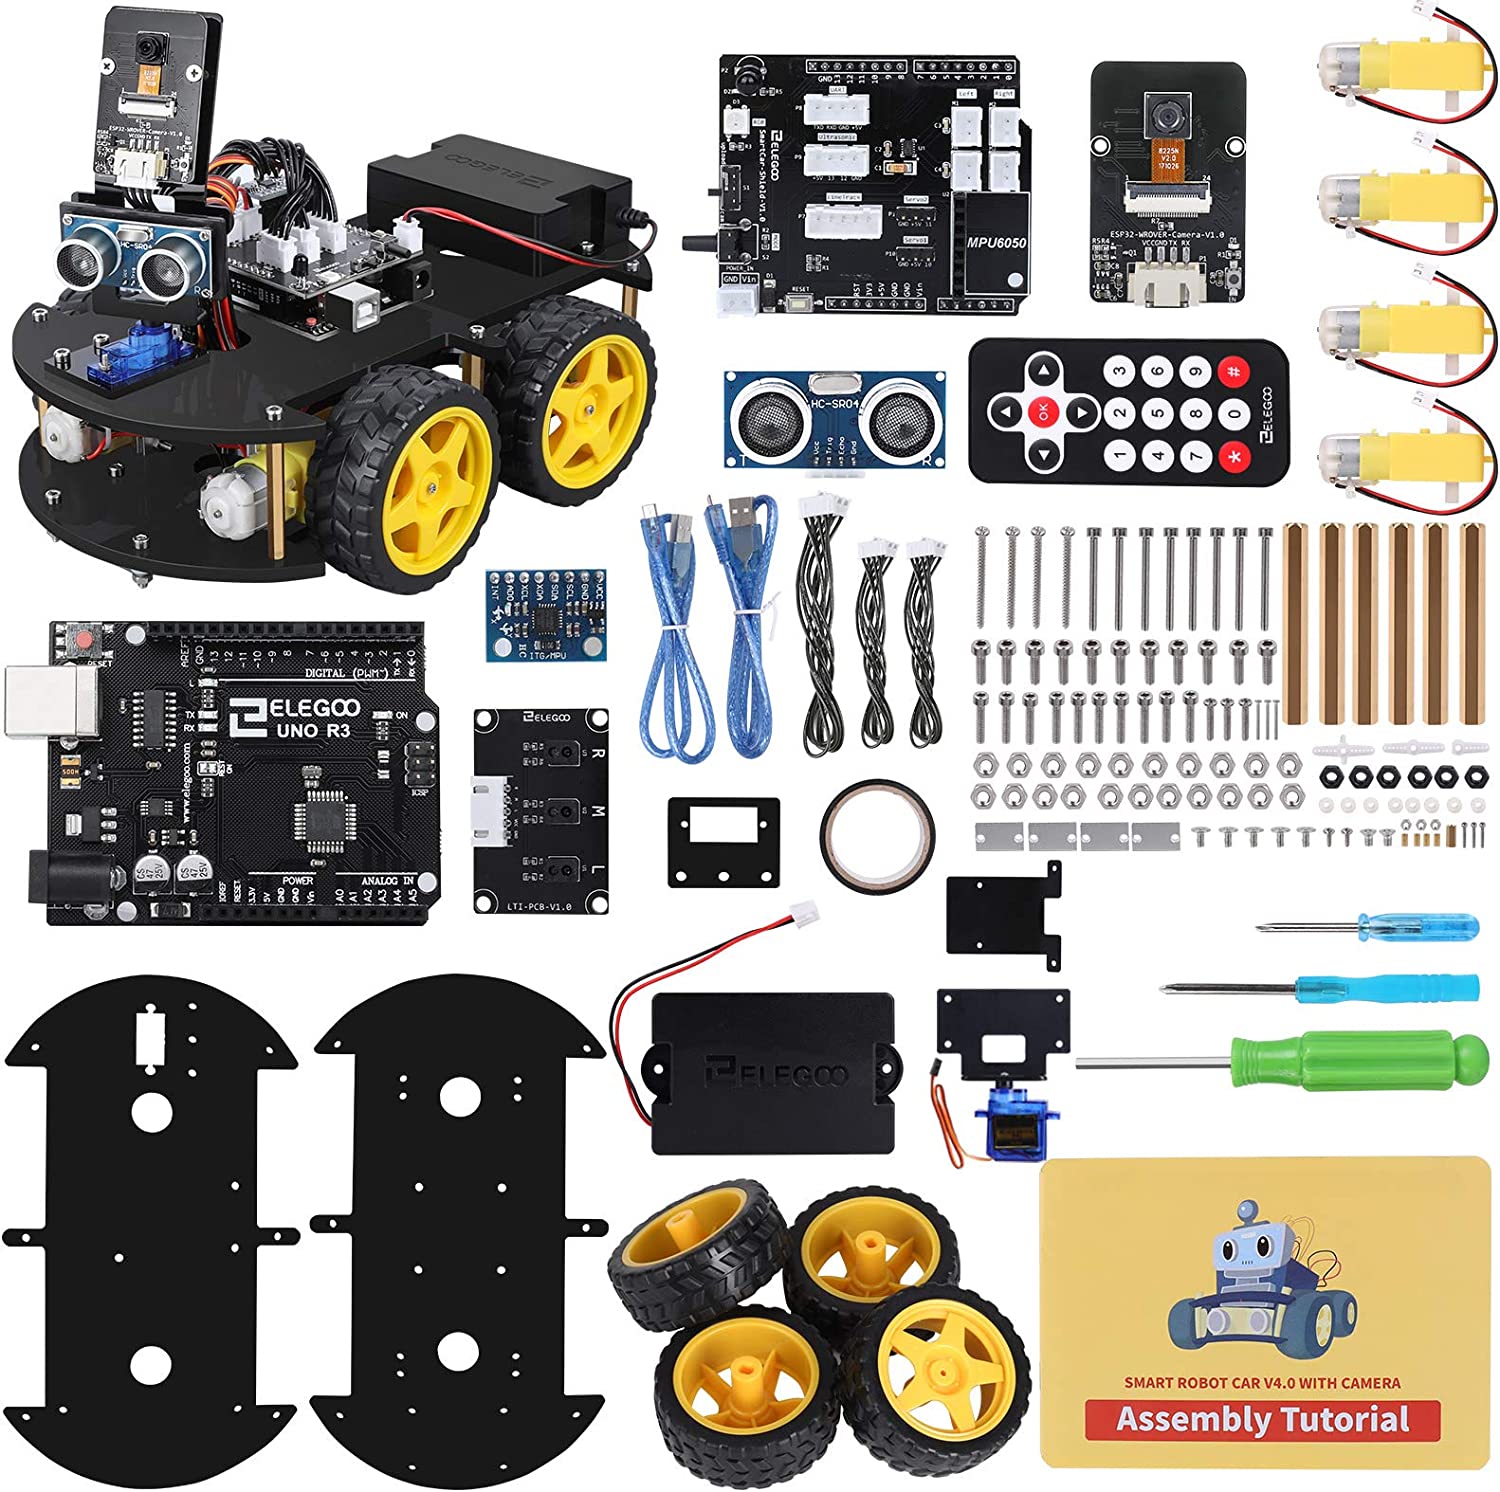 ELEGOO UNO Auto-Follow Infrared Remote Robot Kit